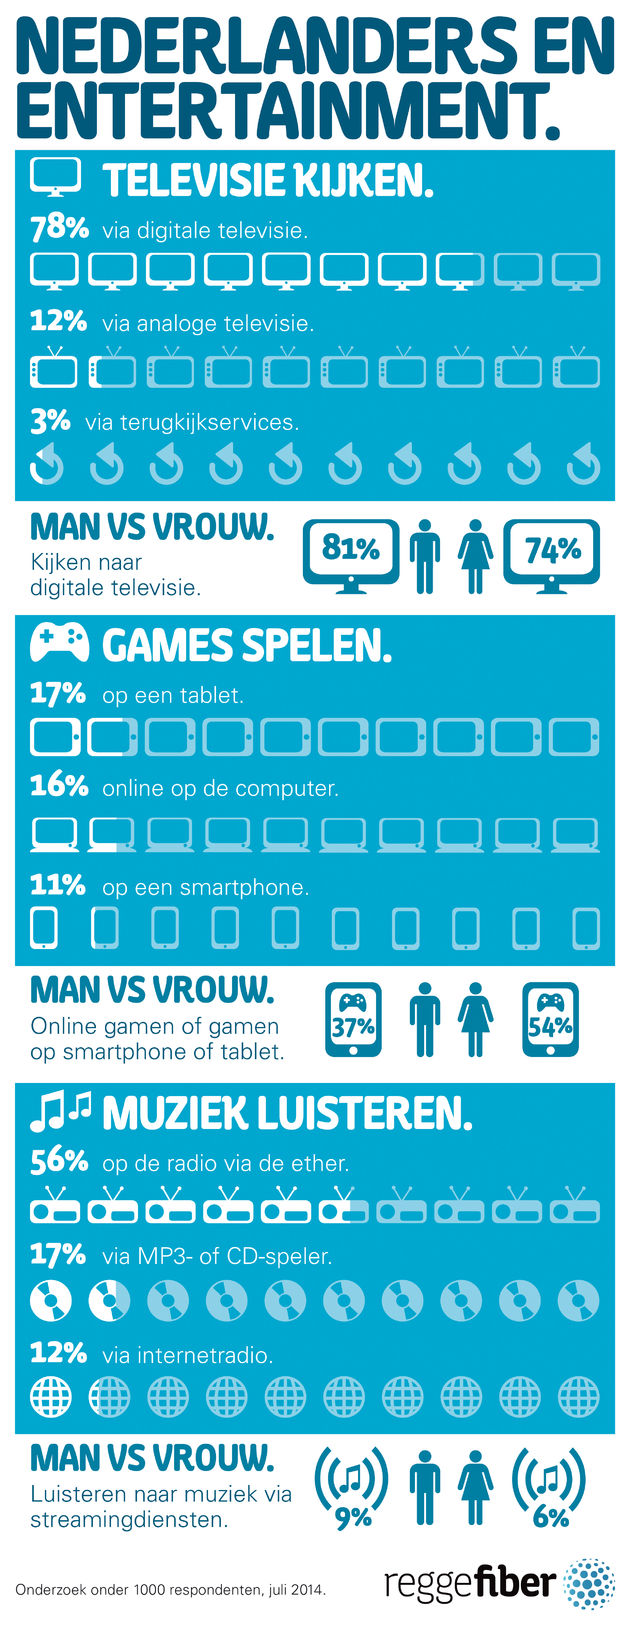 infographic nederland entertainment